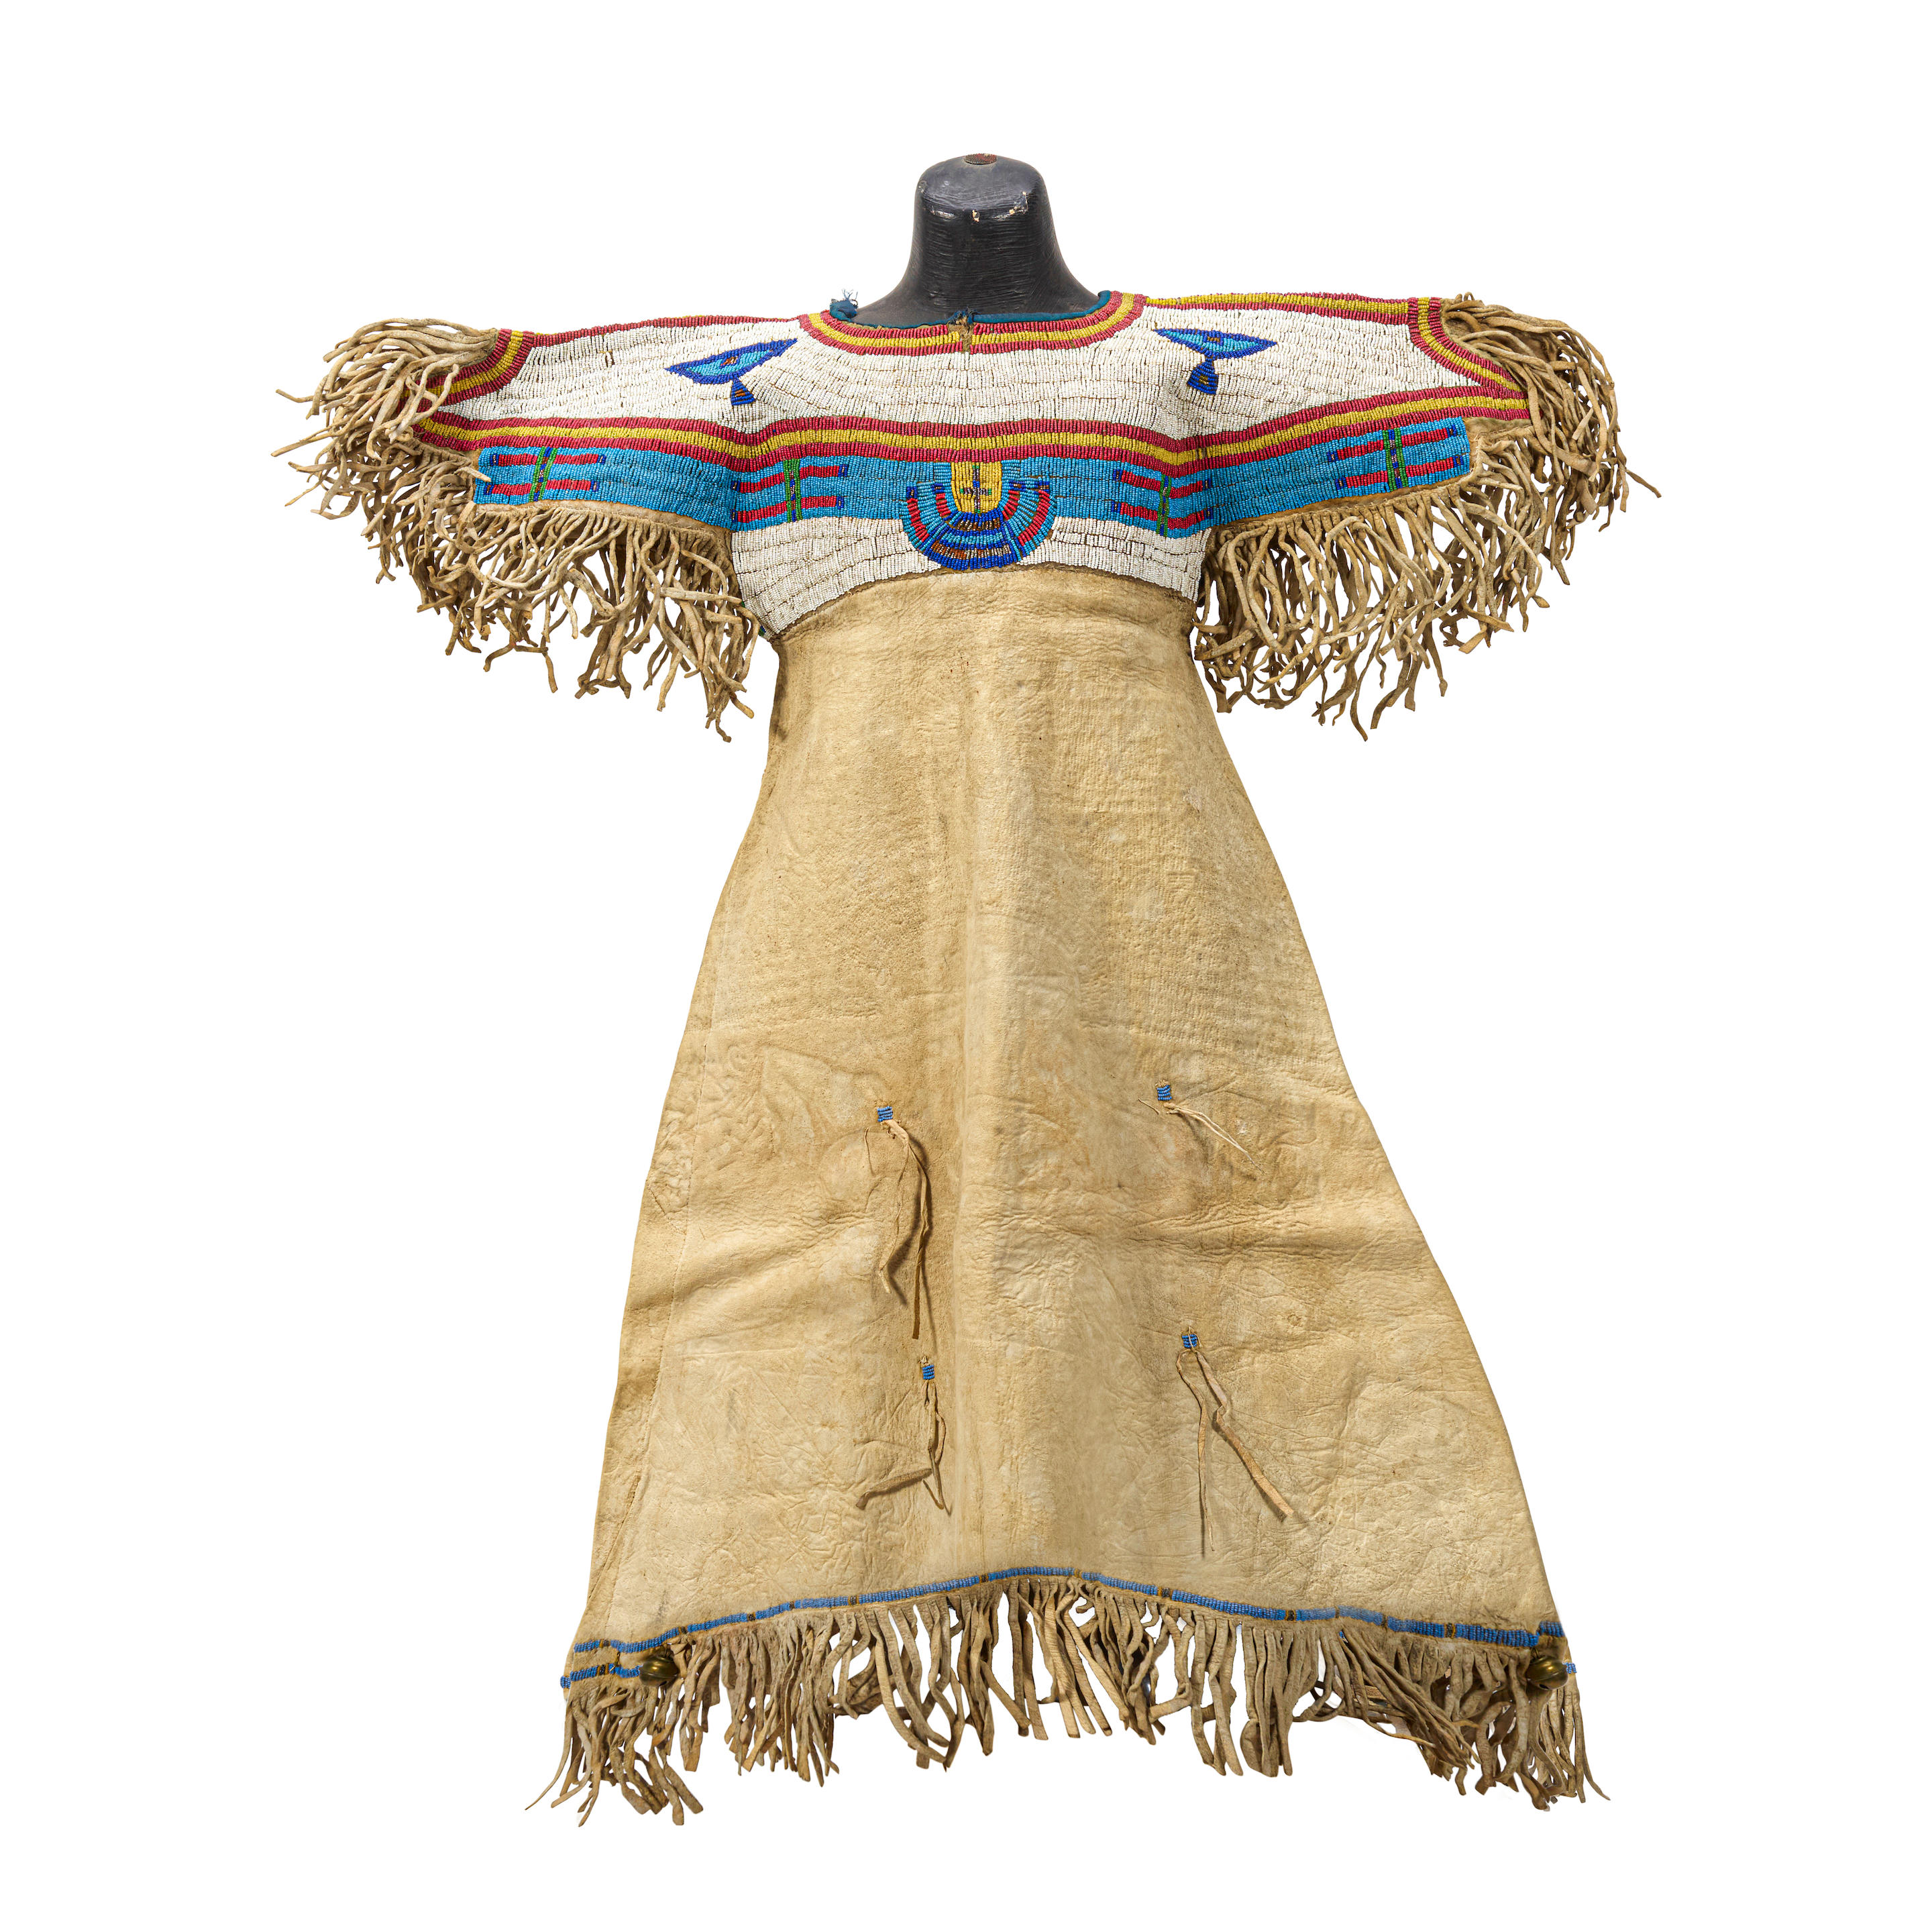 Bonhams : A Lakota (Sioux) or Tsis tsis'tas (Cheyenne) girl's beaded dress